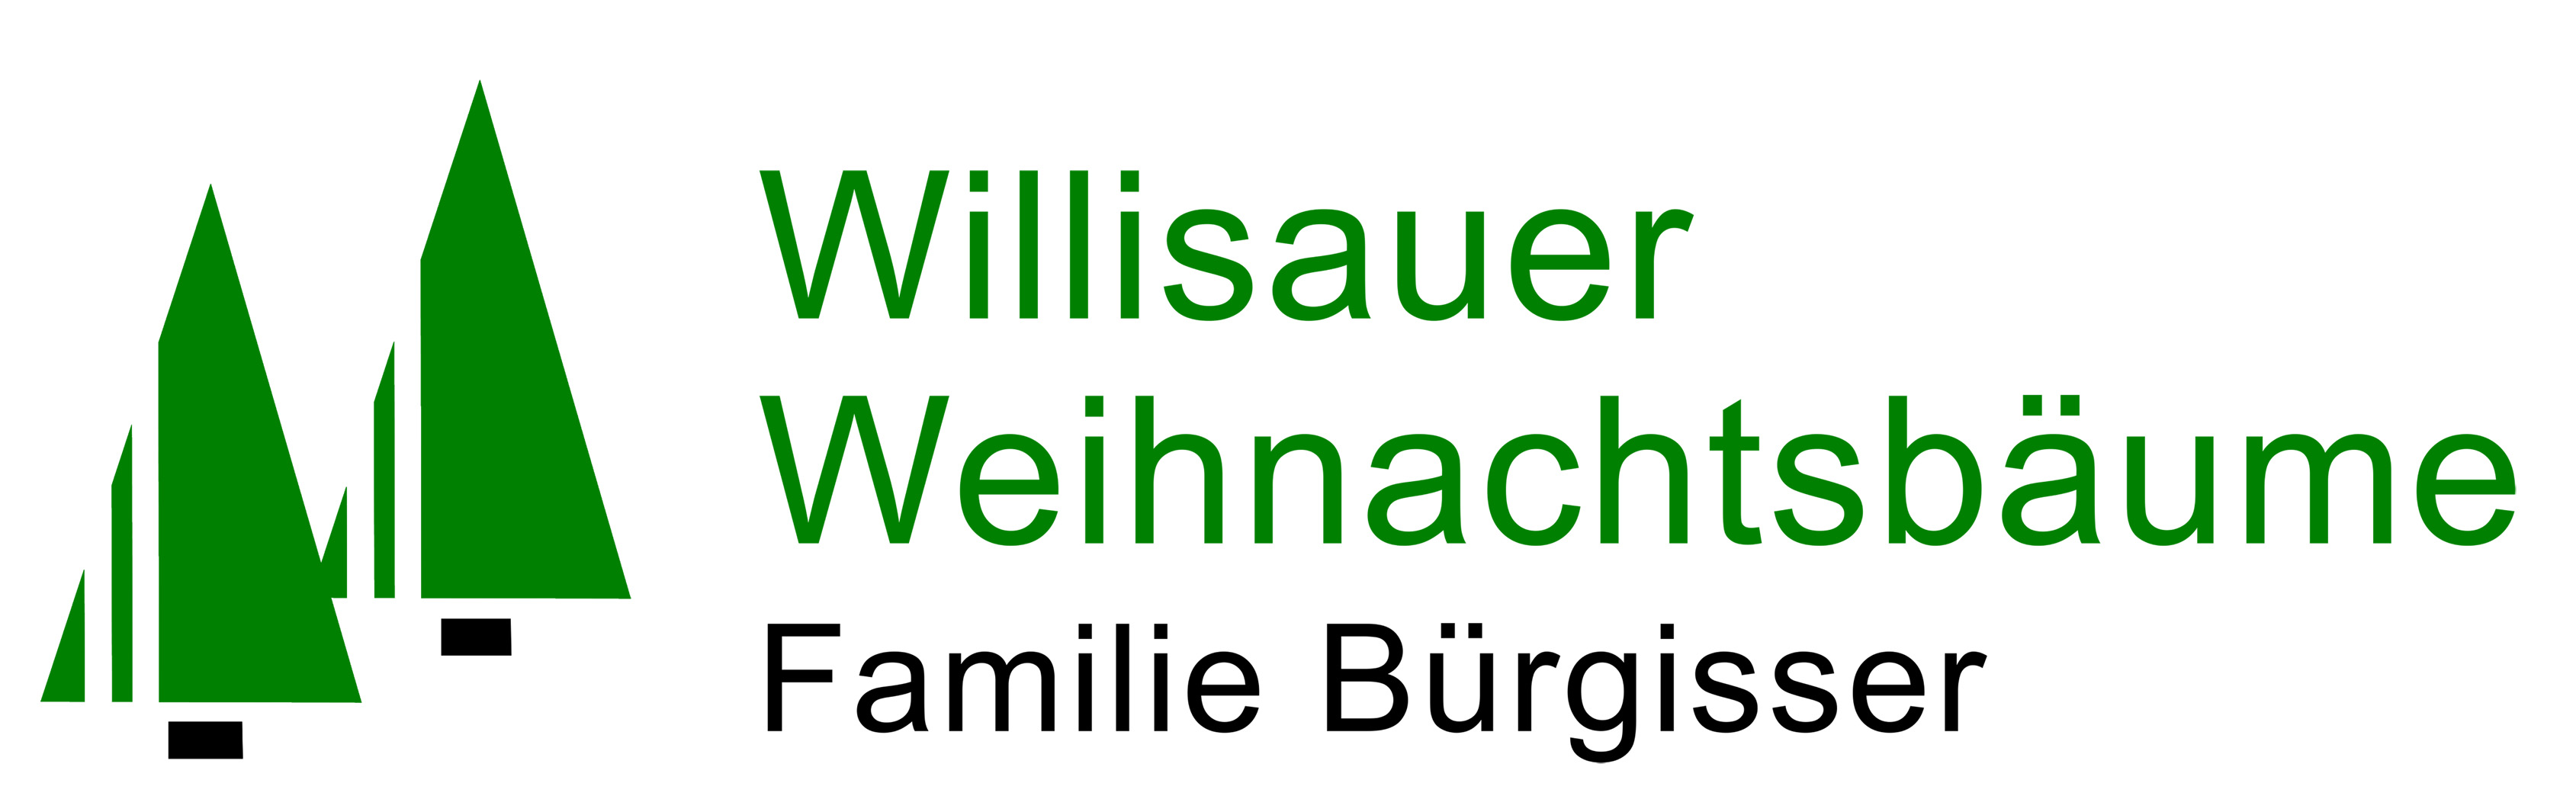 Willilsauer Weihnachtsbäume - Familie Bürgisser